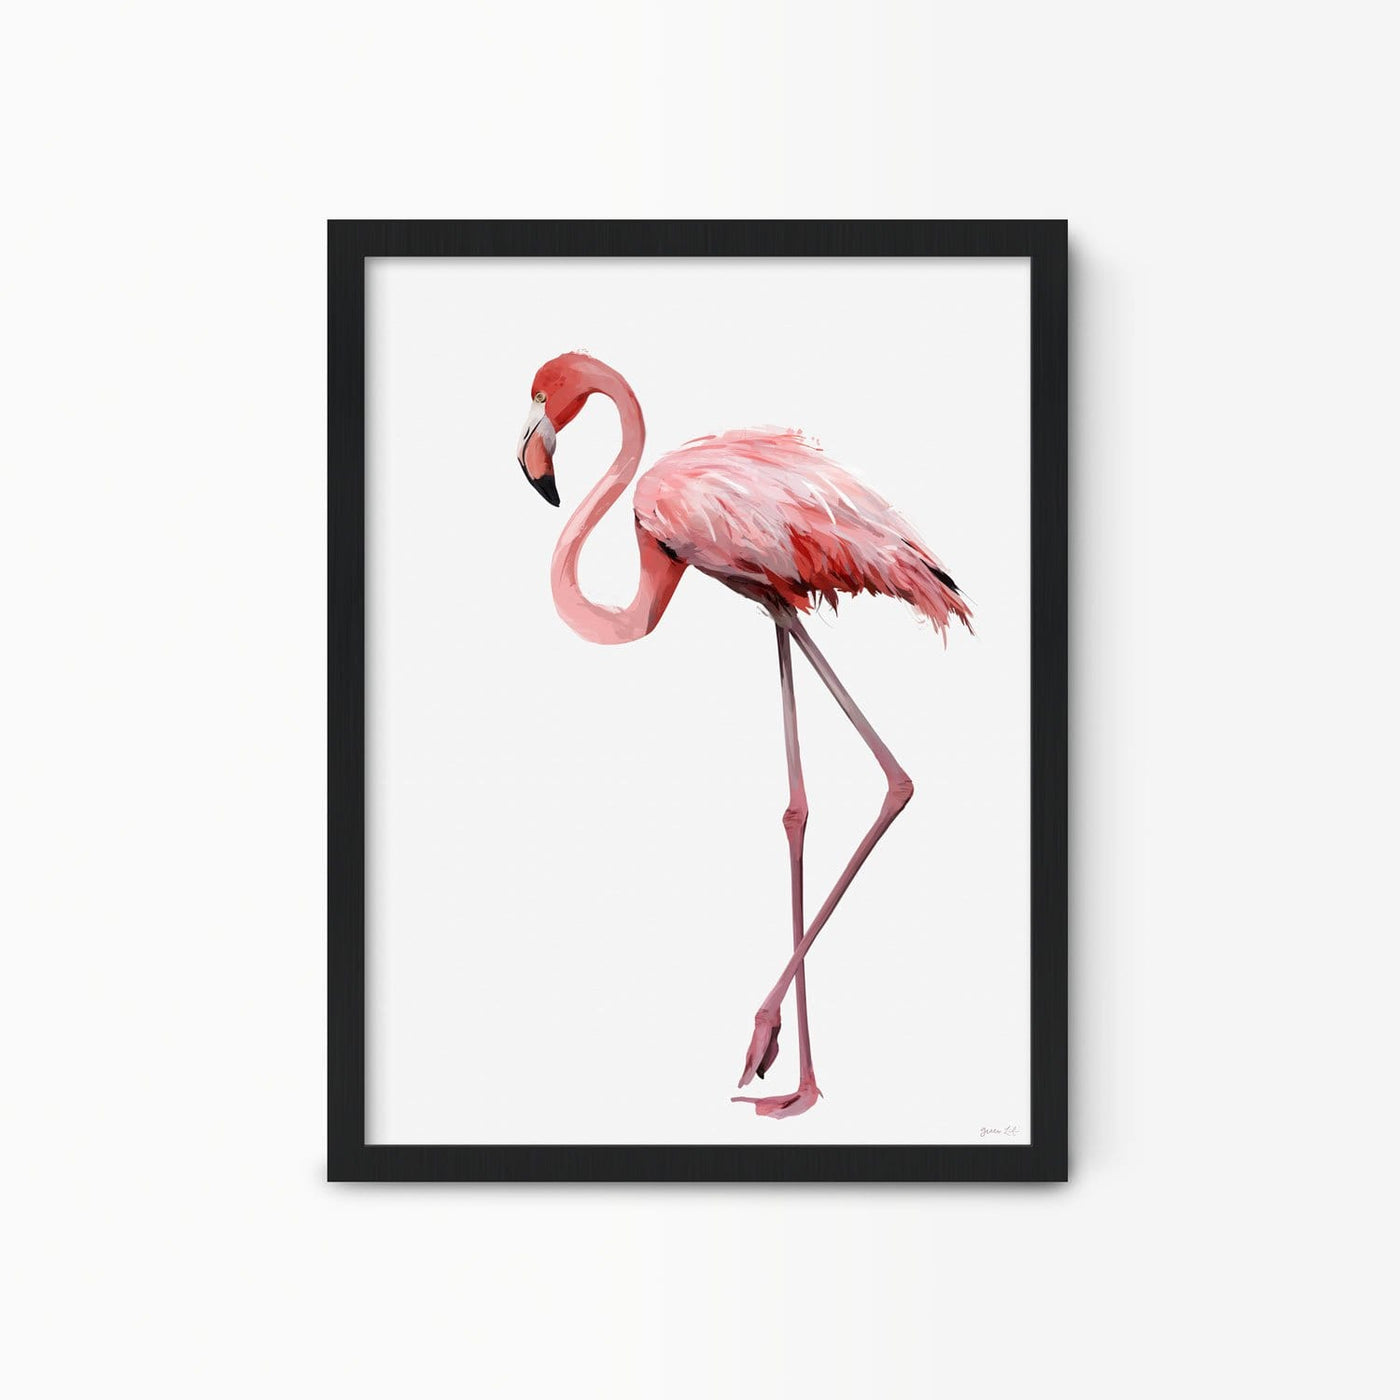 Green Lili 30x40cm (12x16") / Black Frame Classy Pink Flamingo Print